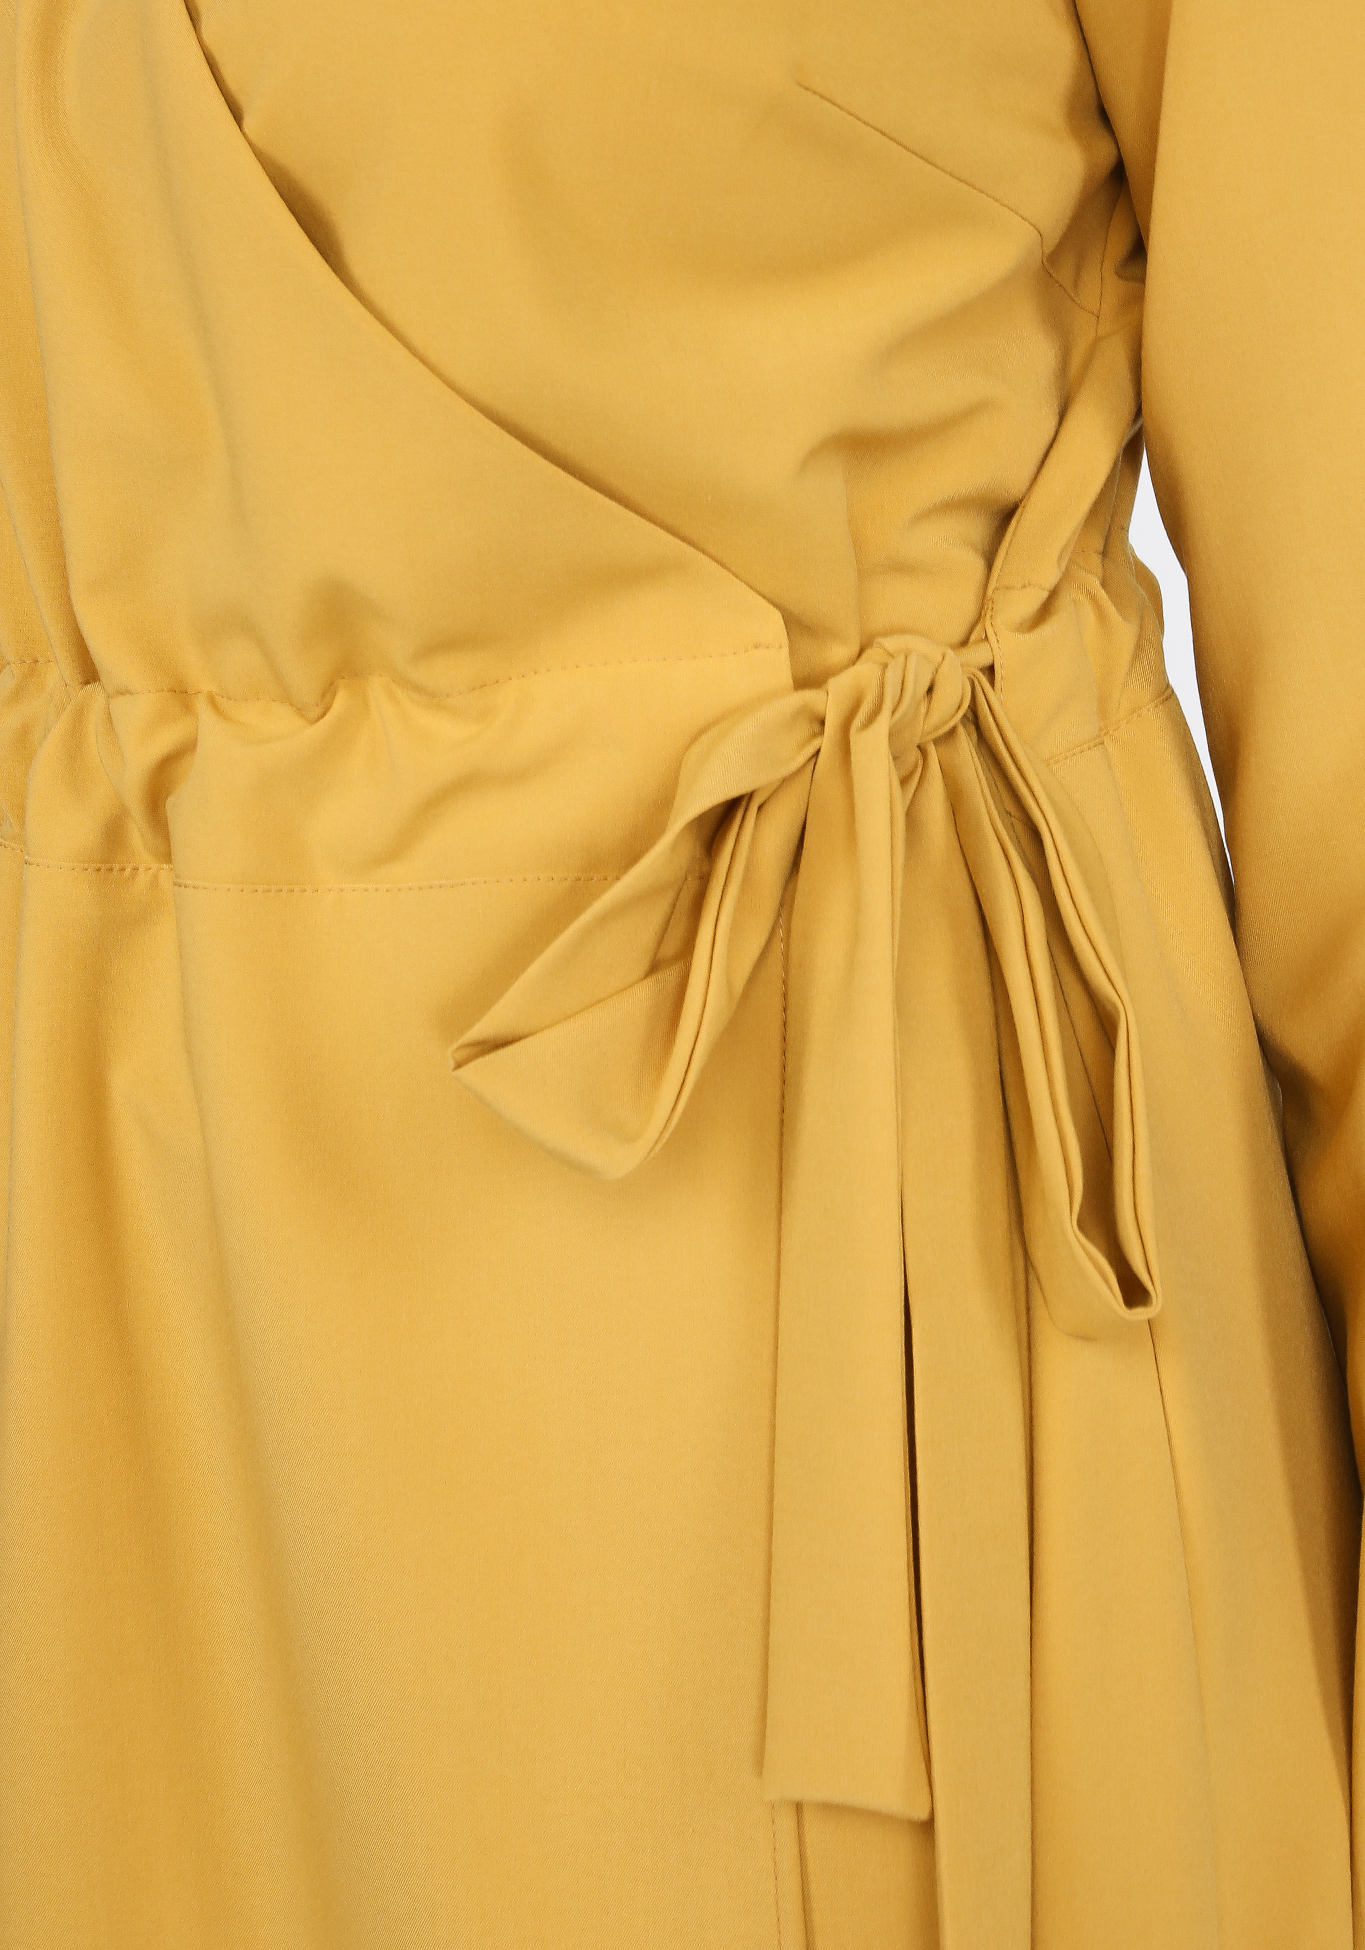 Платье на запах с кулиской на талии Polina Romanova, размер 48, цвет хаки с запахом - фото 4